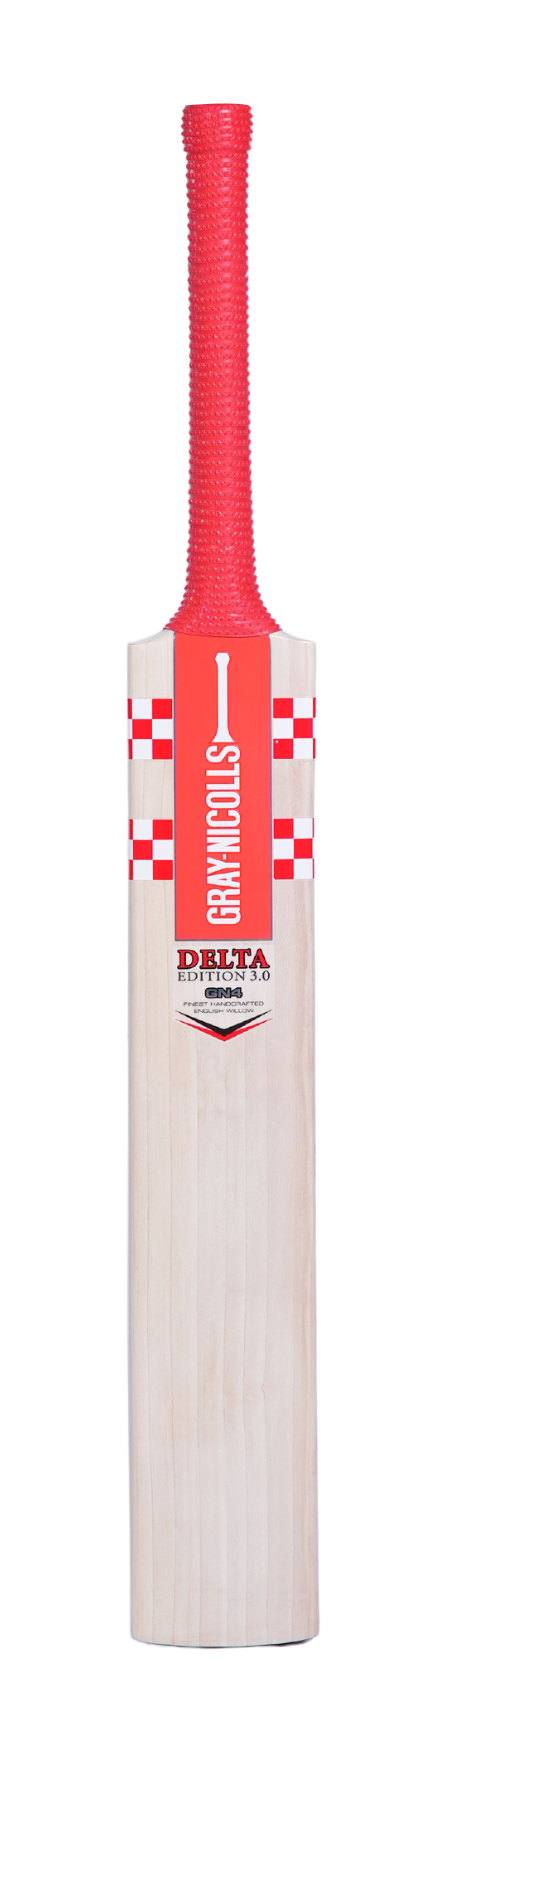 GRAY-NICOLLS Delta GN4 Cricket Bat